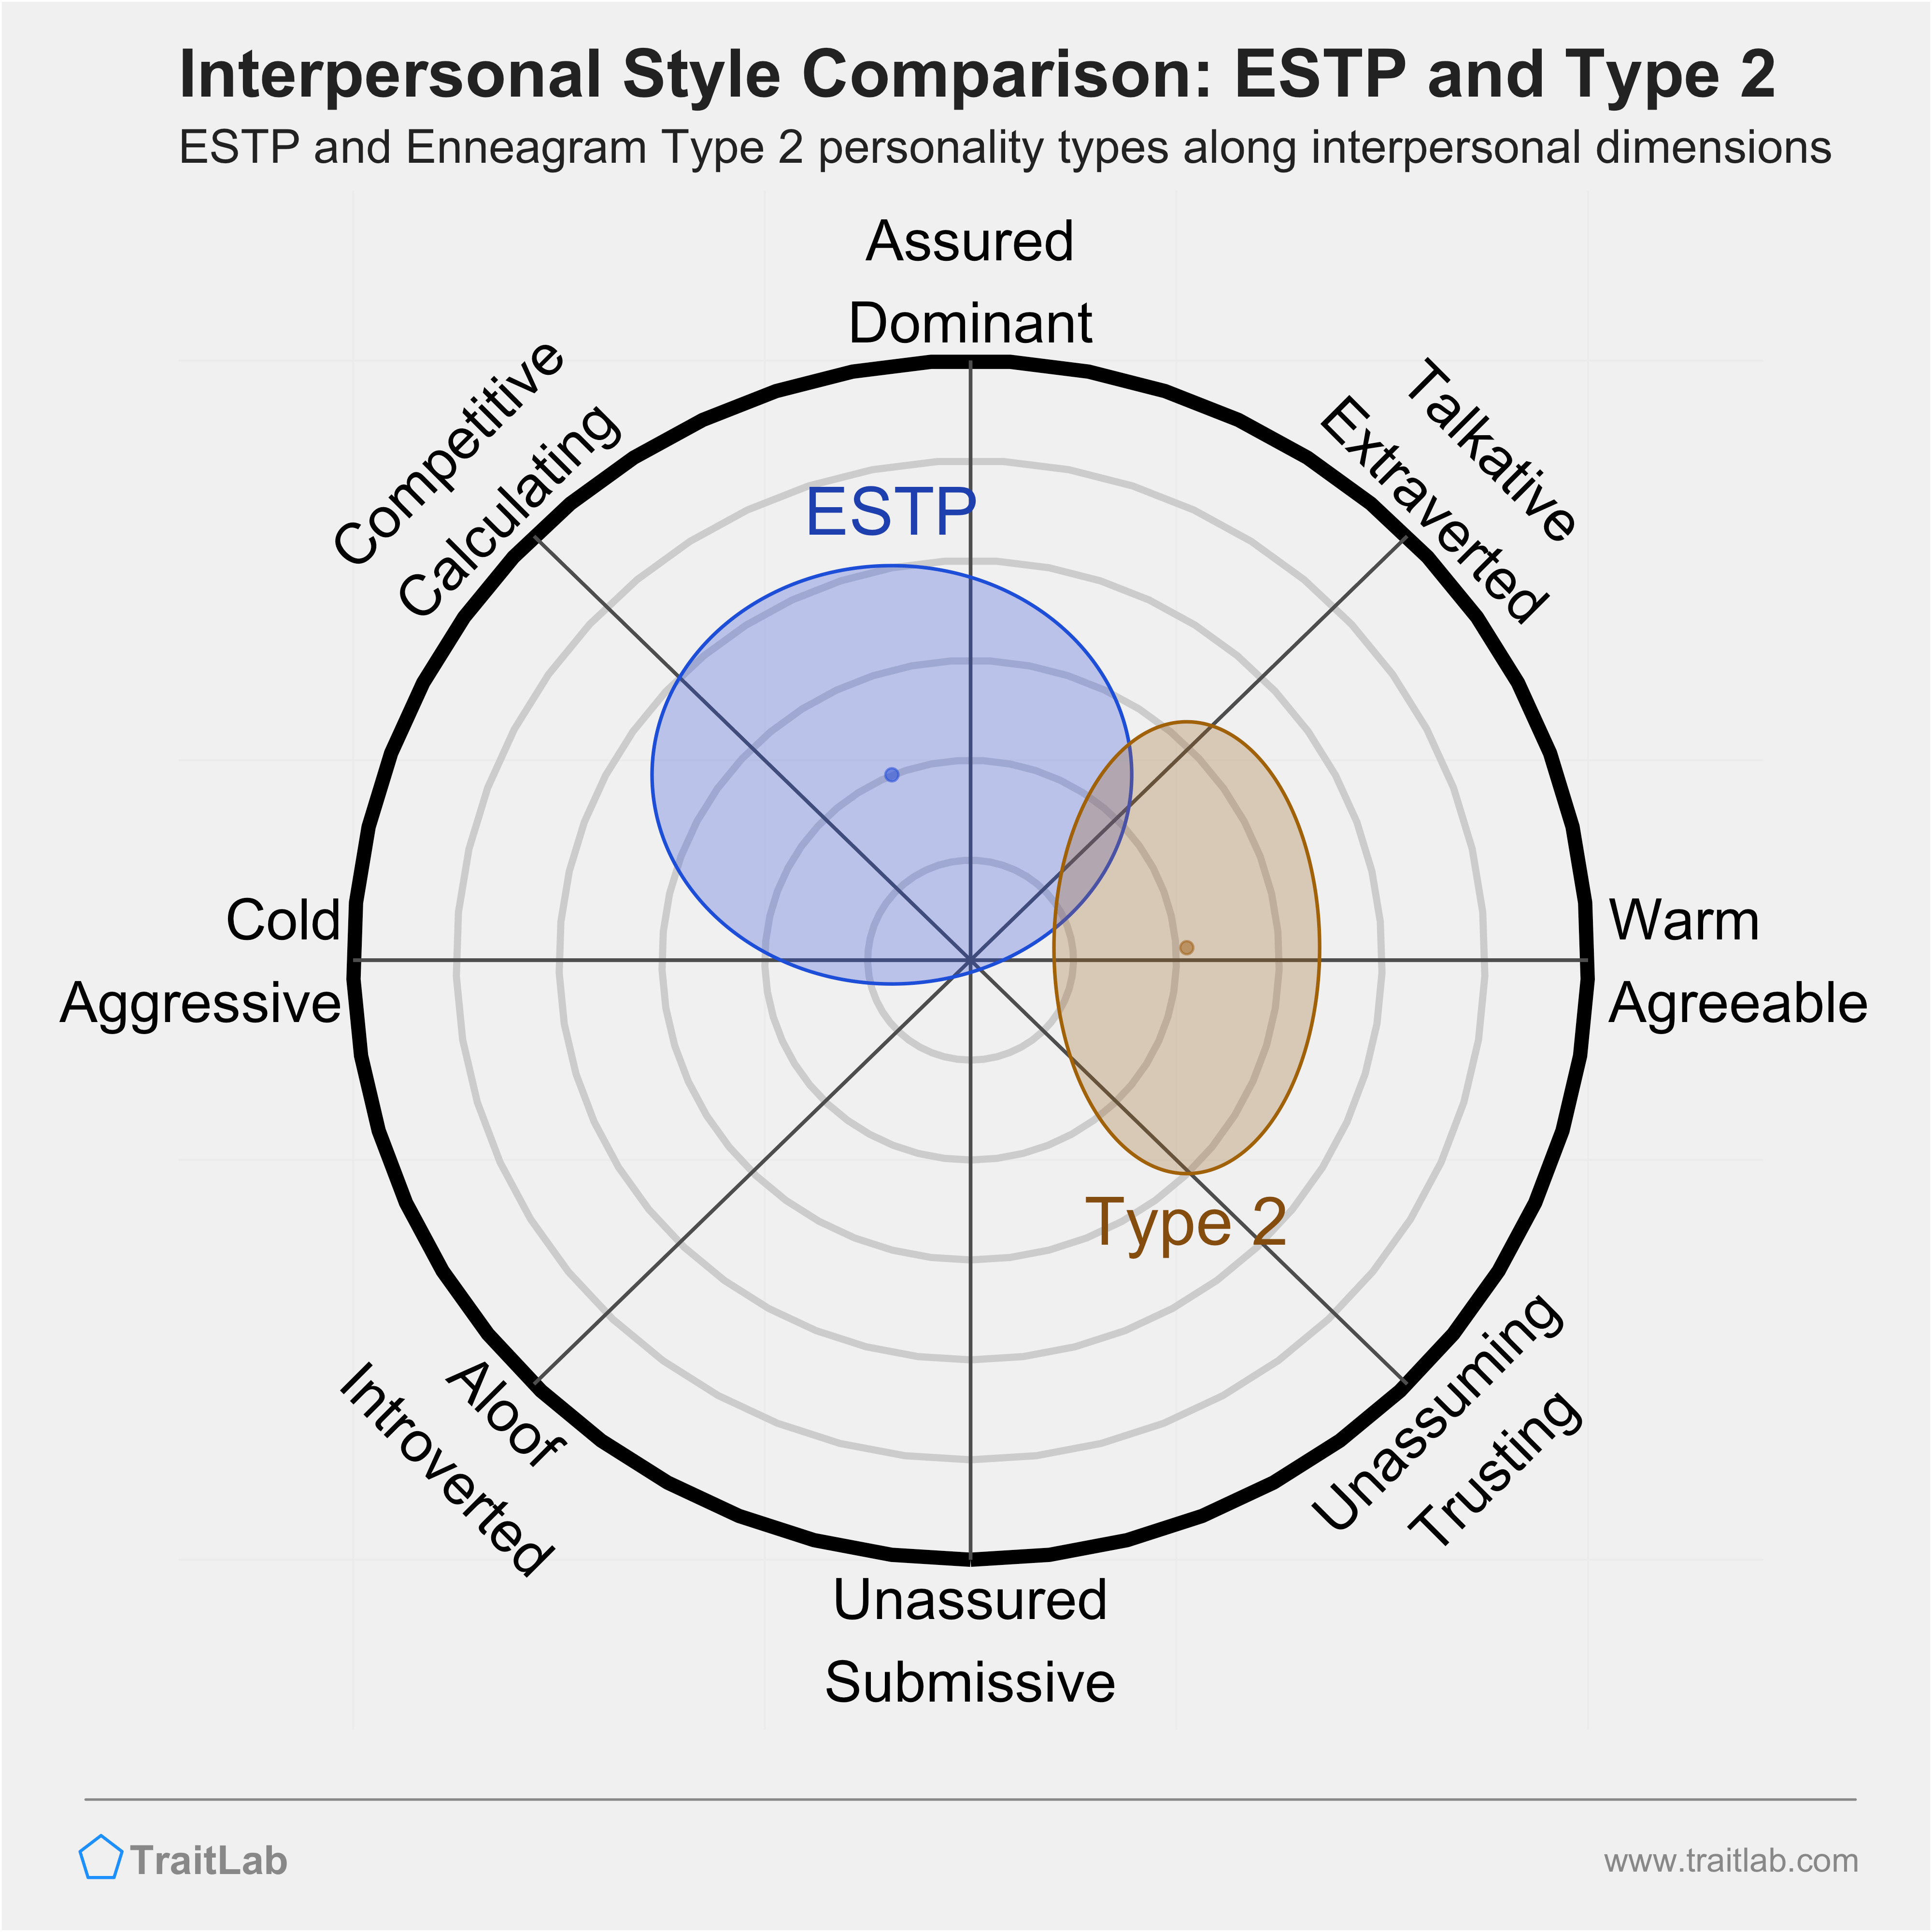 Enneagram ESTP and Type 2 comparison across interpersonal dimensions